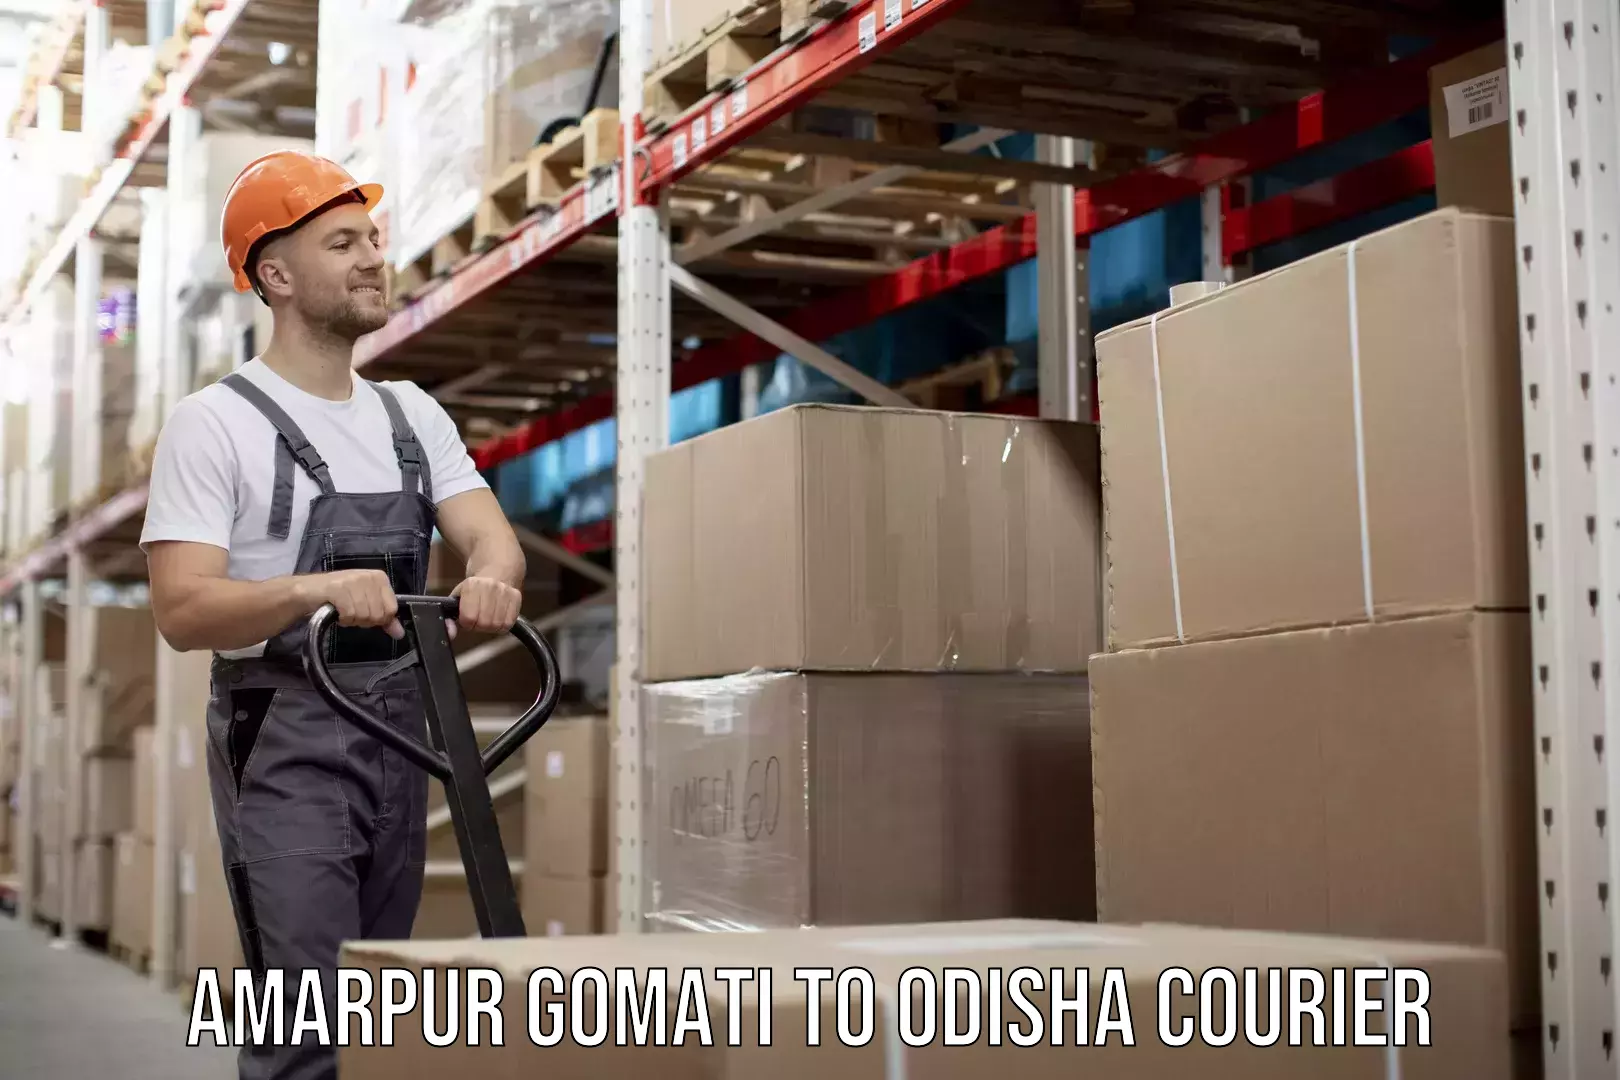 24/7 courier service Amarpur Gomati to Odisha